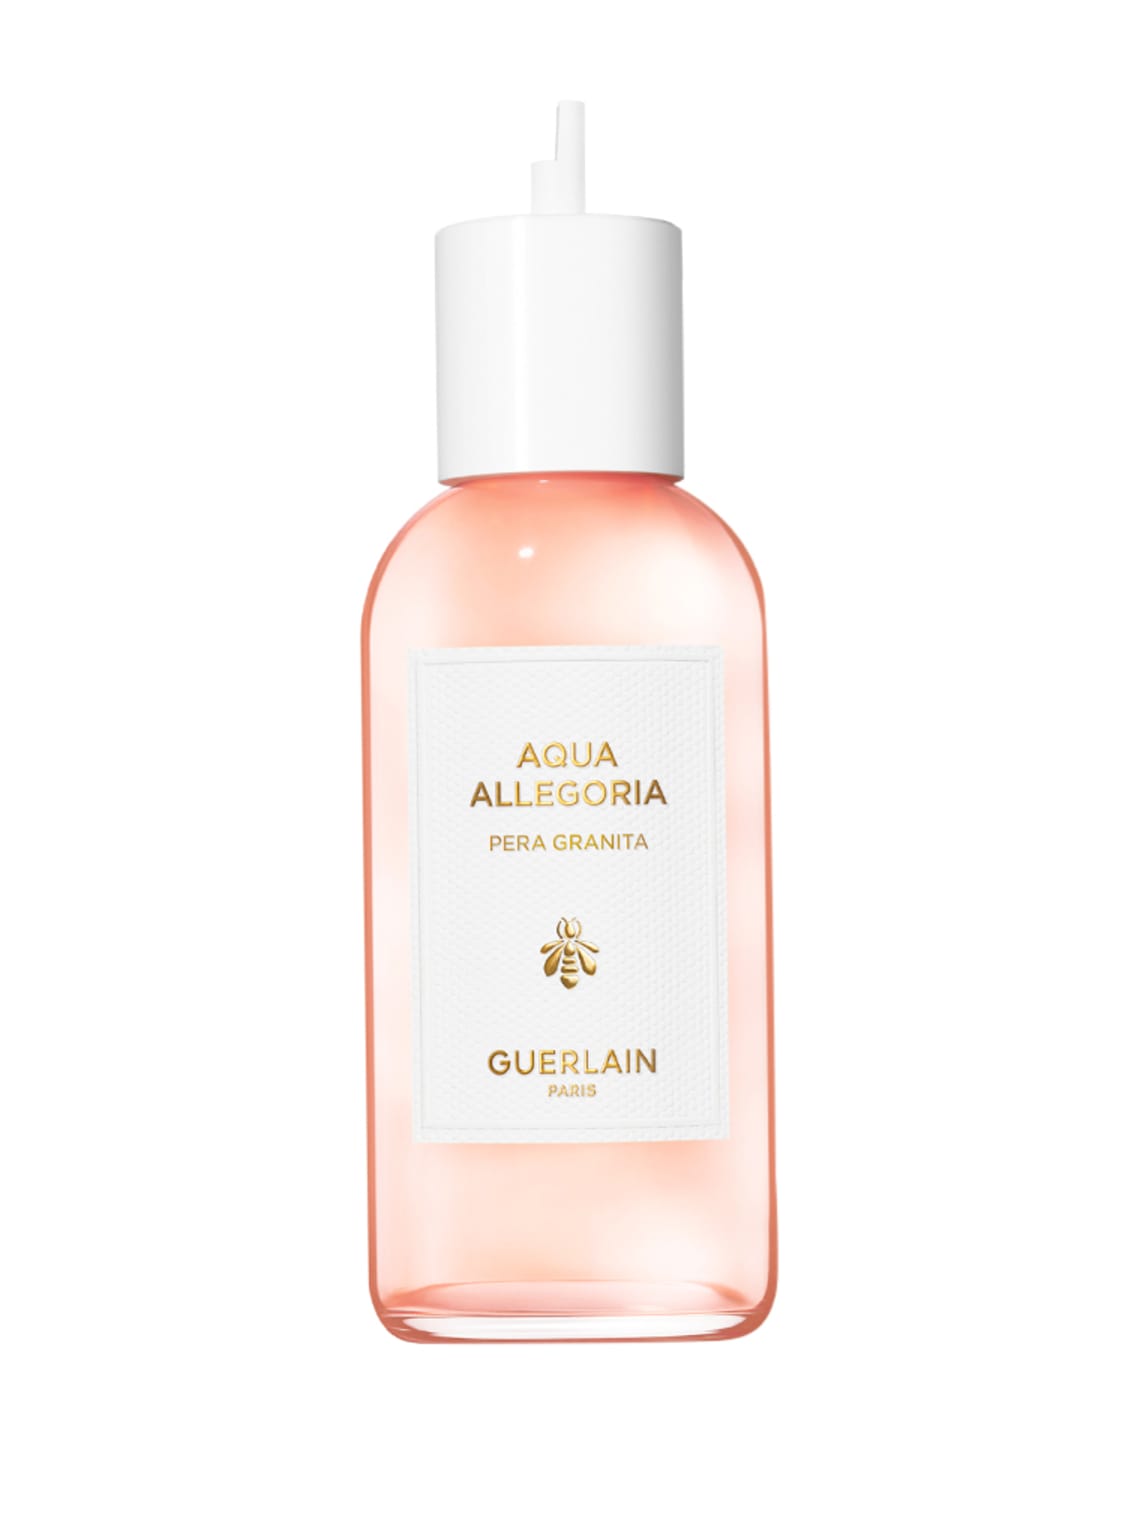 Guerlain Aqua Allegoria Pera Granita Refill Eau de Toilette 200 ml